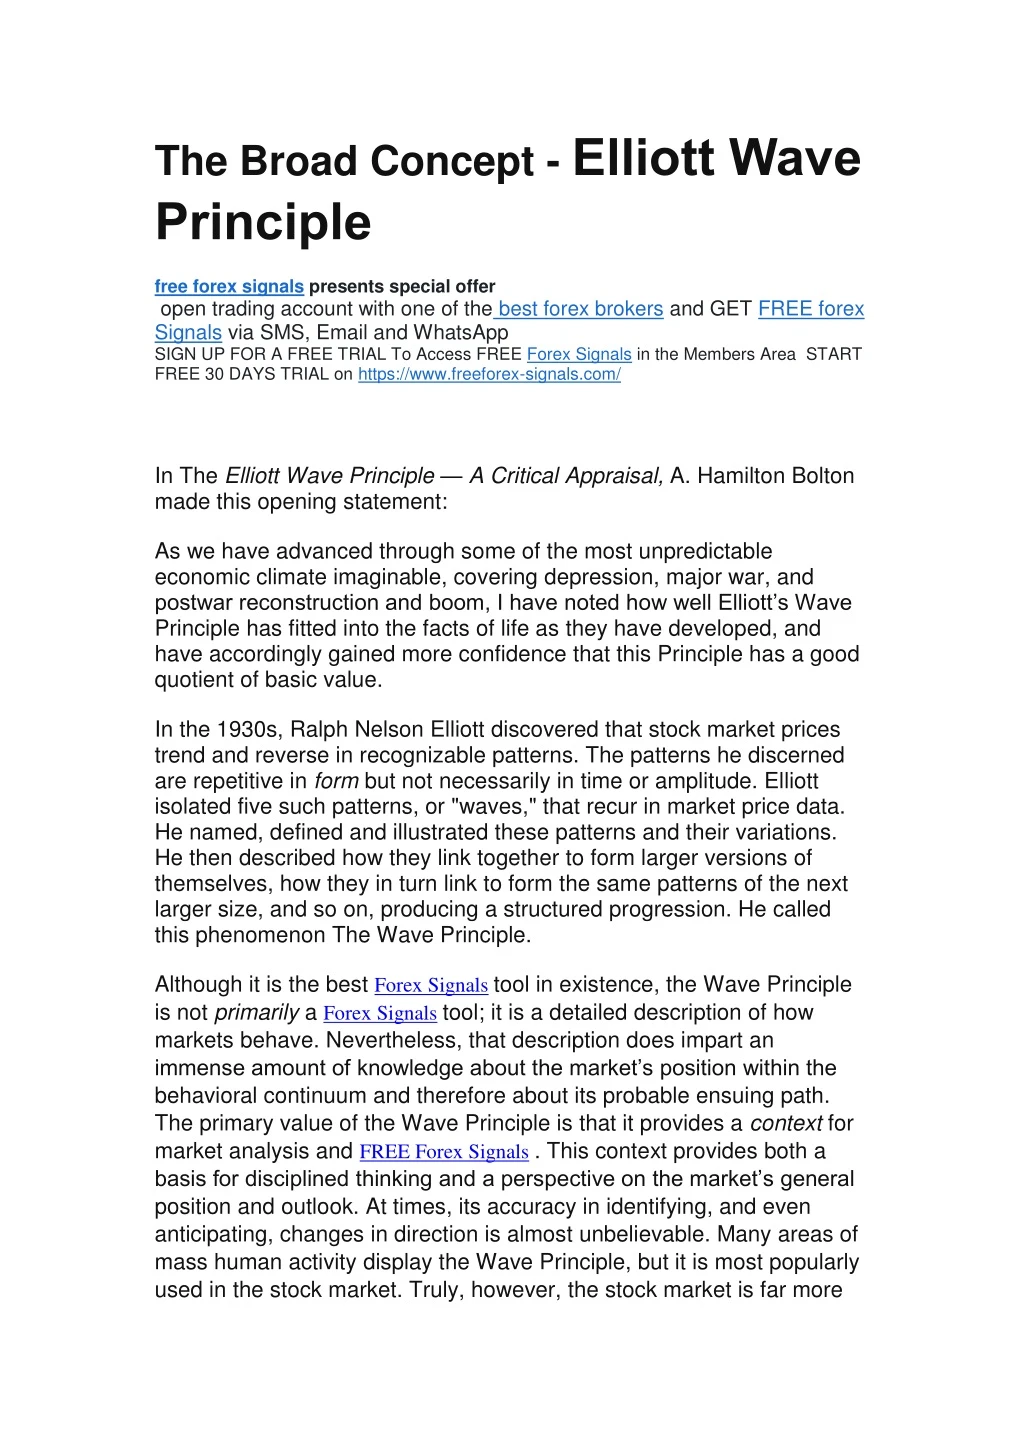 the broad concept elliott wave principle free